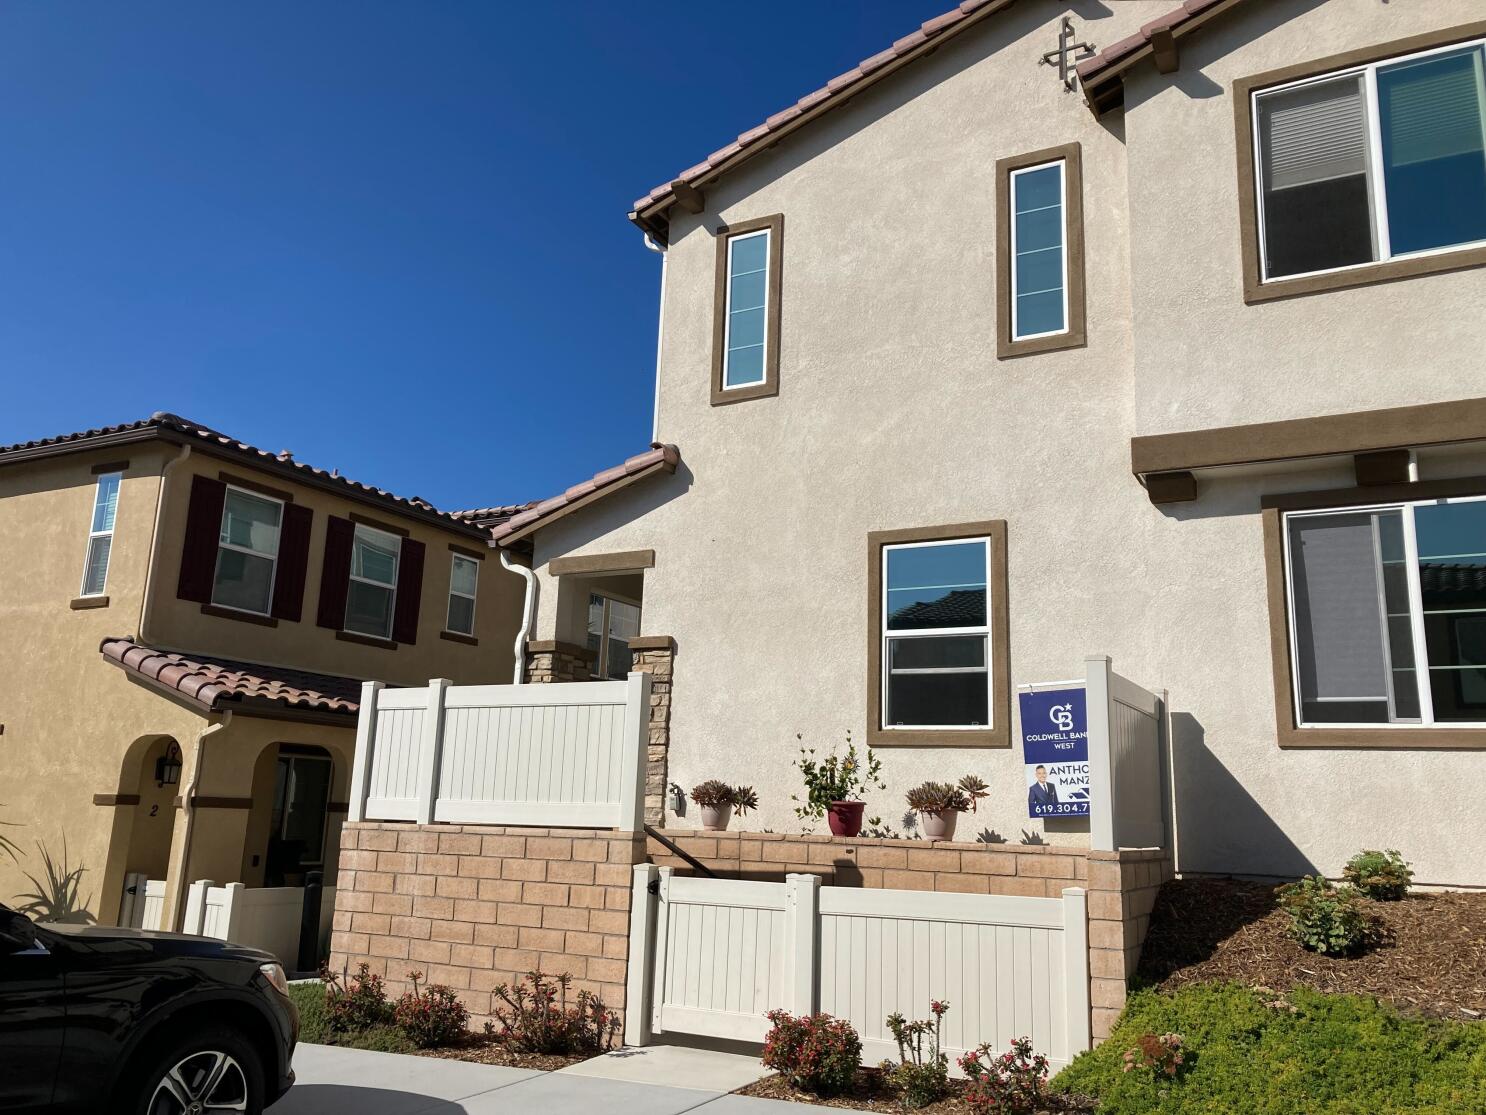 San Diego home price gains slow - The San Diego Union-Tribune